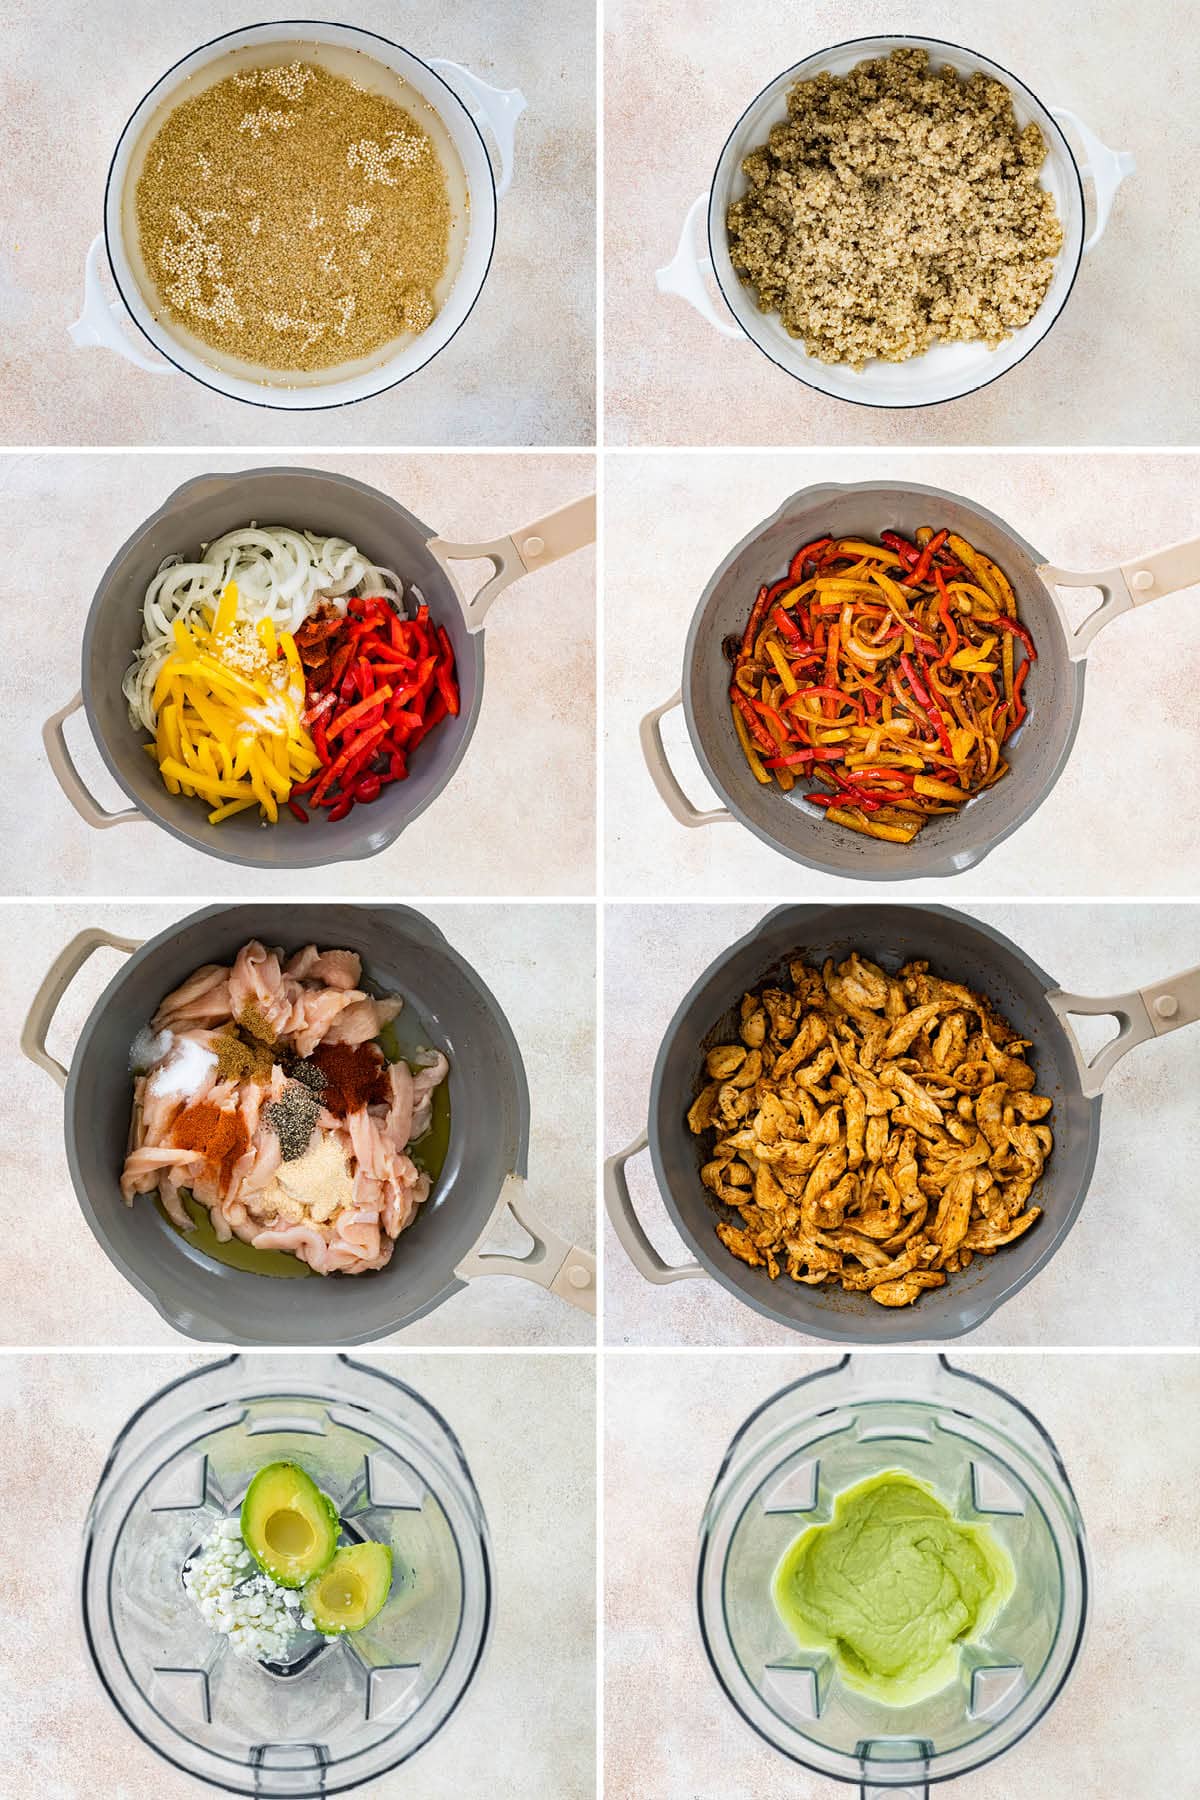 Collage of 8 photos show steps to make Chicken Fajita Bowls: cooking quinoa, sautéing veggies, cooking chicken strips and blending the avocado sauce.